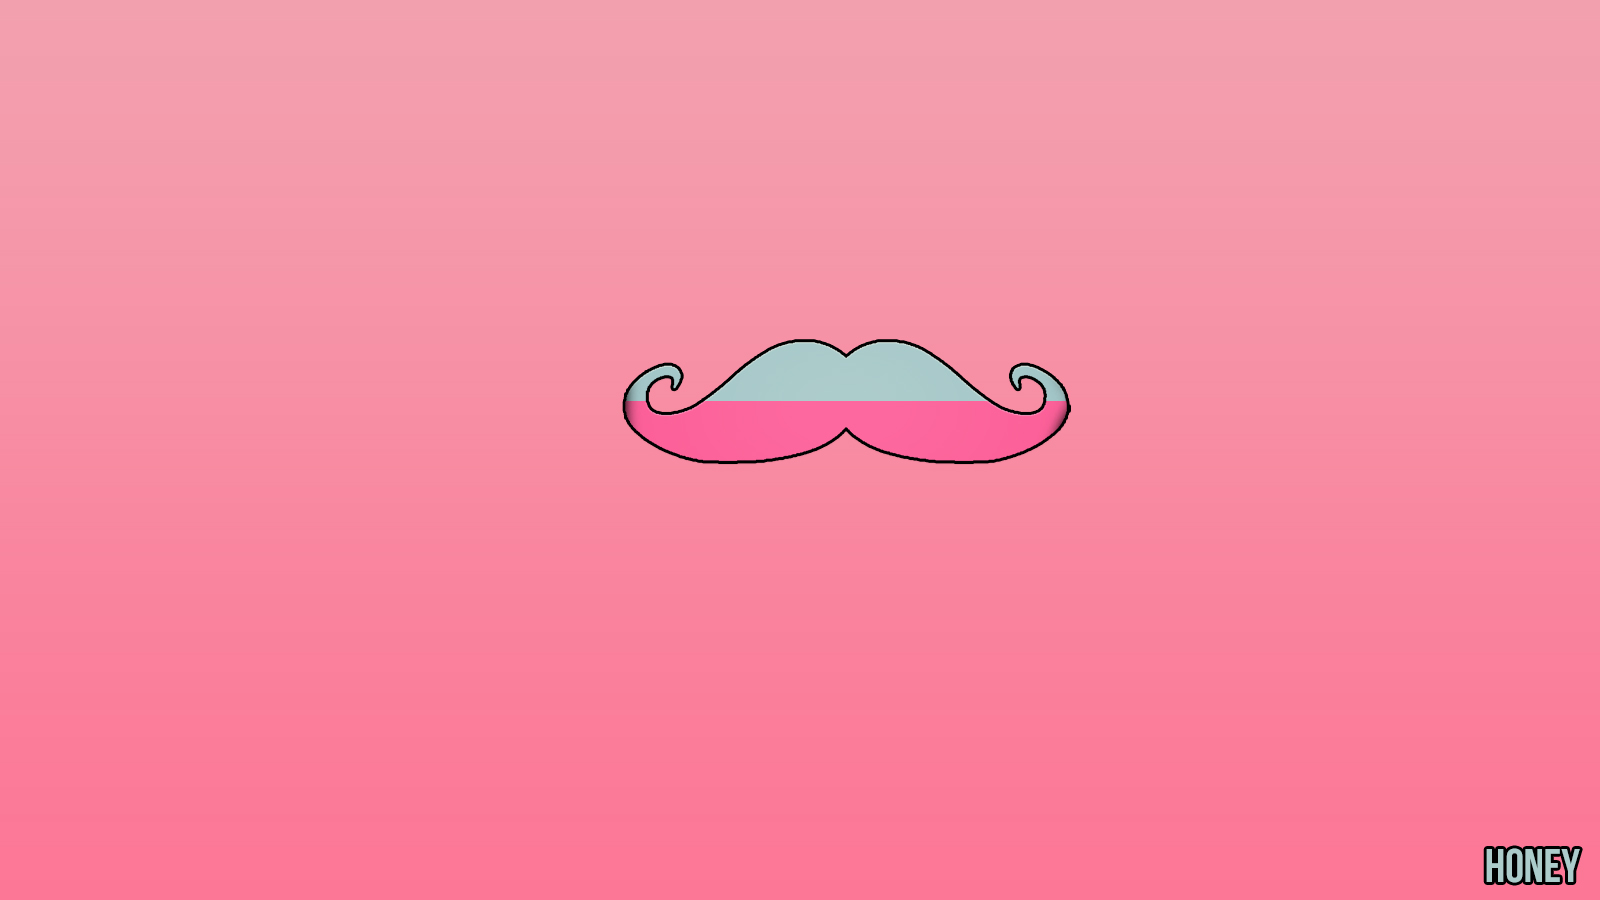 Mustache Wallpaper For iPhone